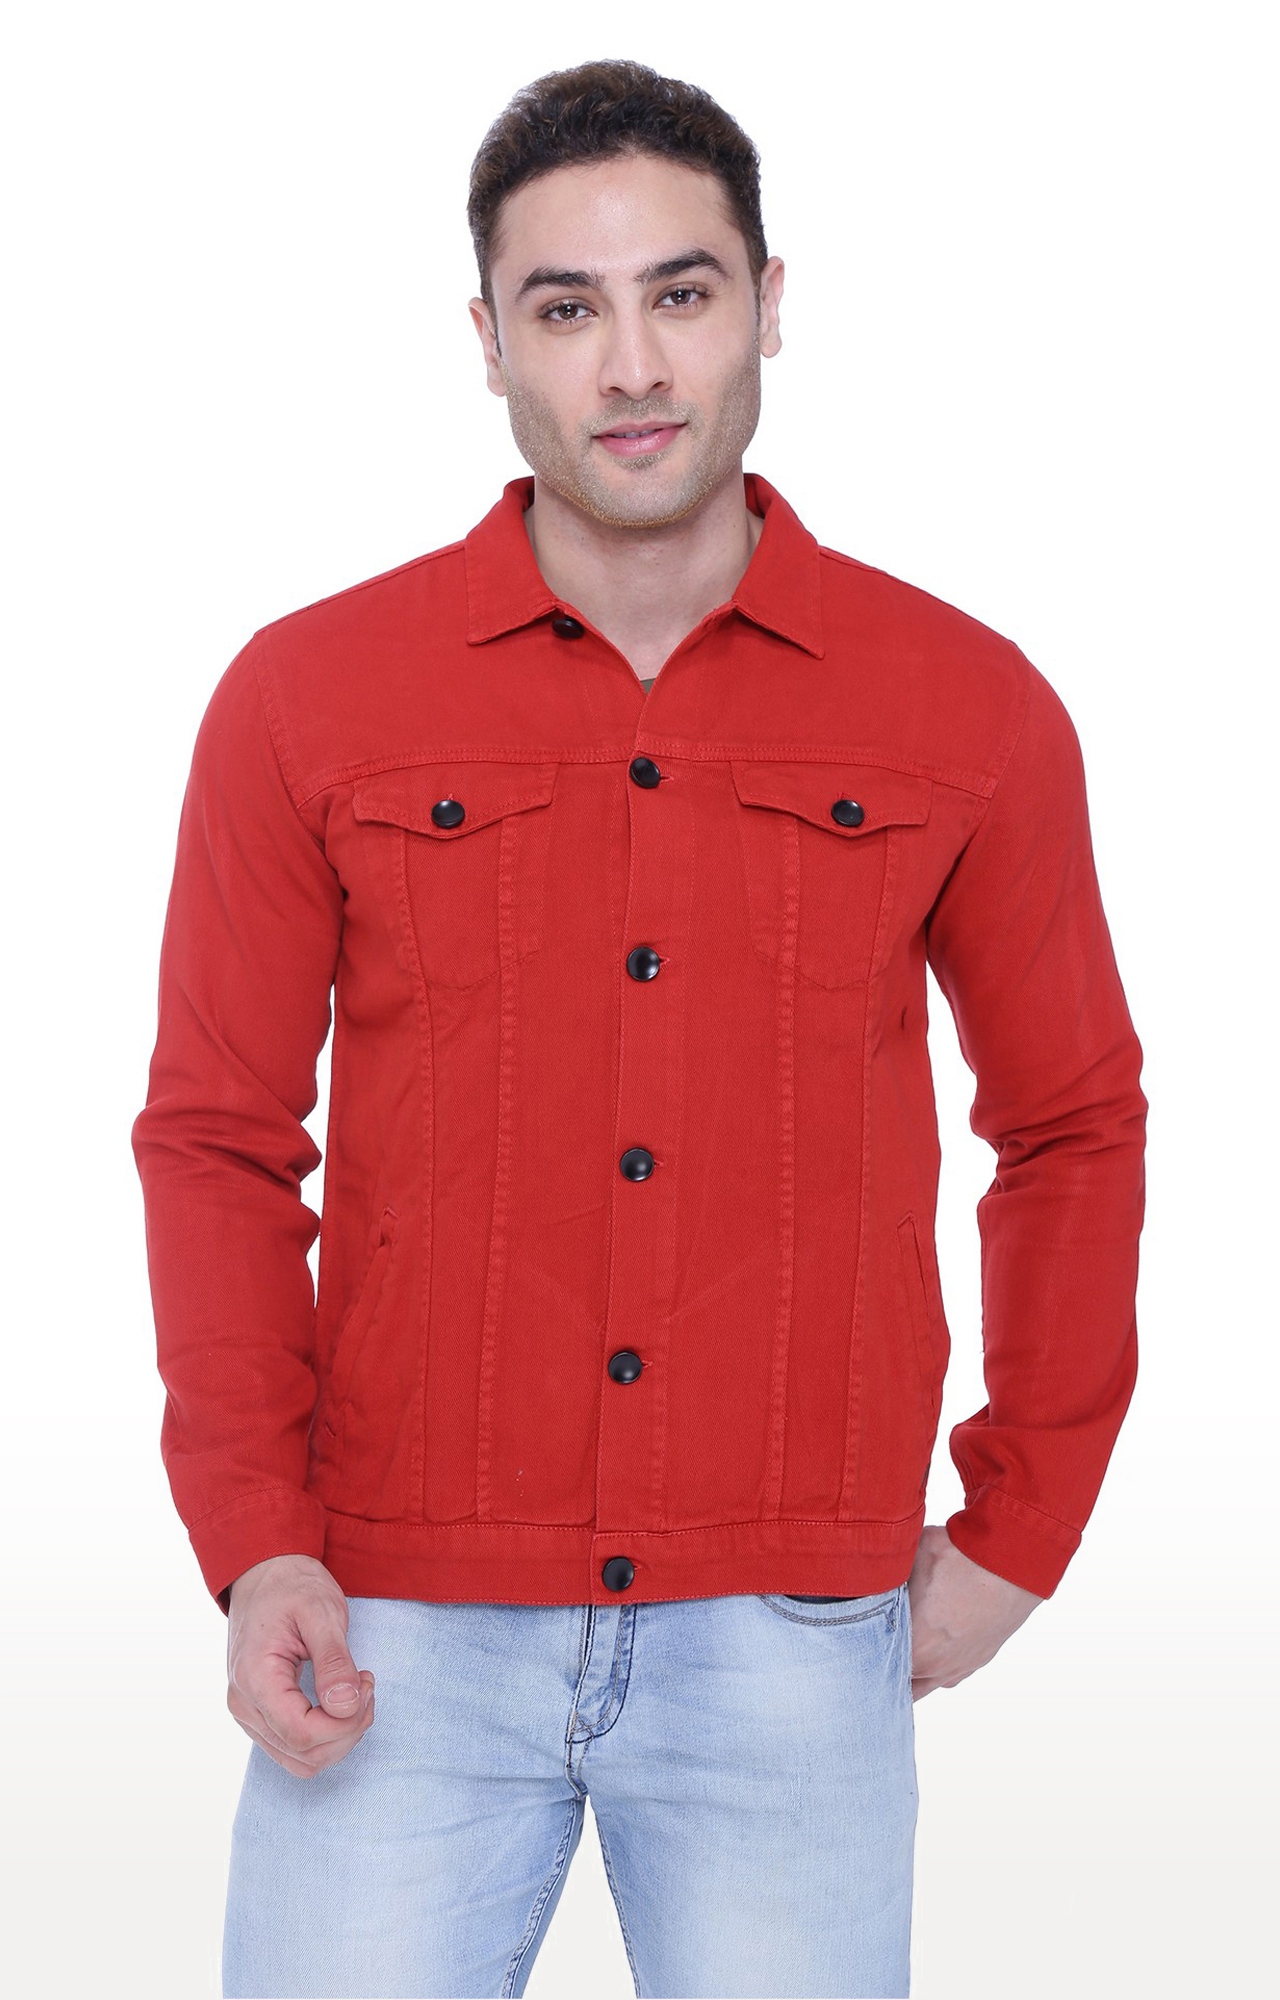 Kuons Avenue | Kuons Avenue Men's Cherry Red Denim Jacket